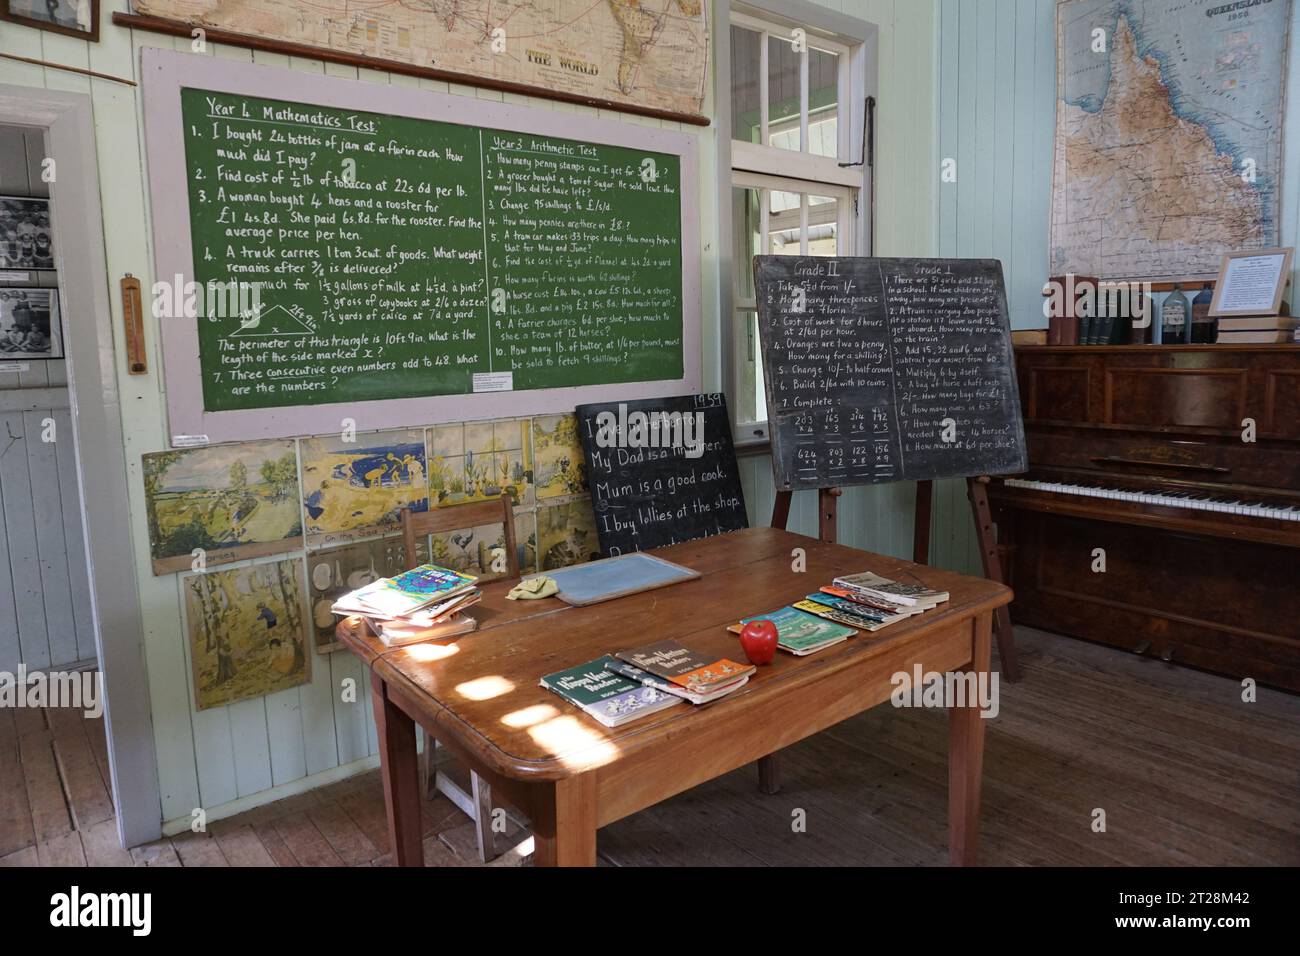 Old fashioned classroom in school in historical village outdoor museum in Herberton, Queensland, Australia Stock Photo